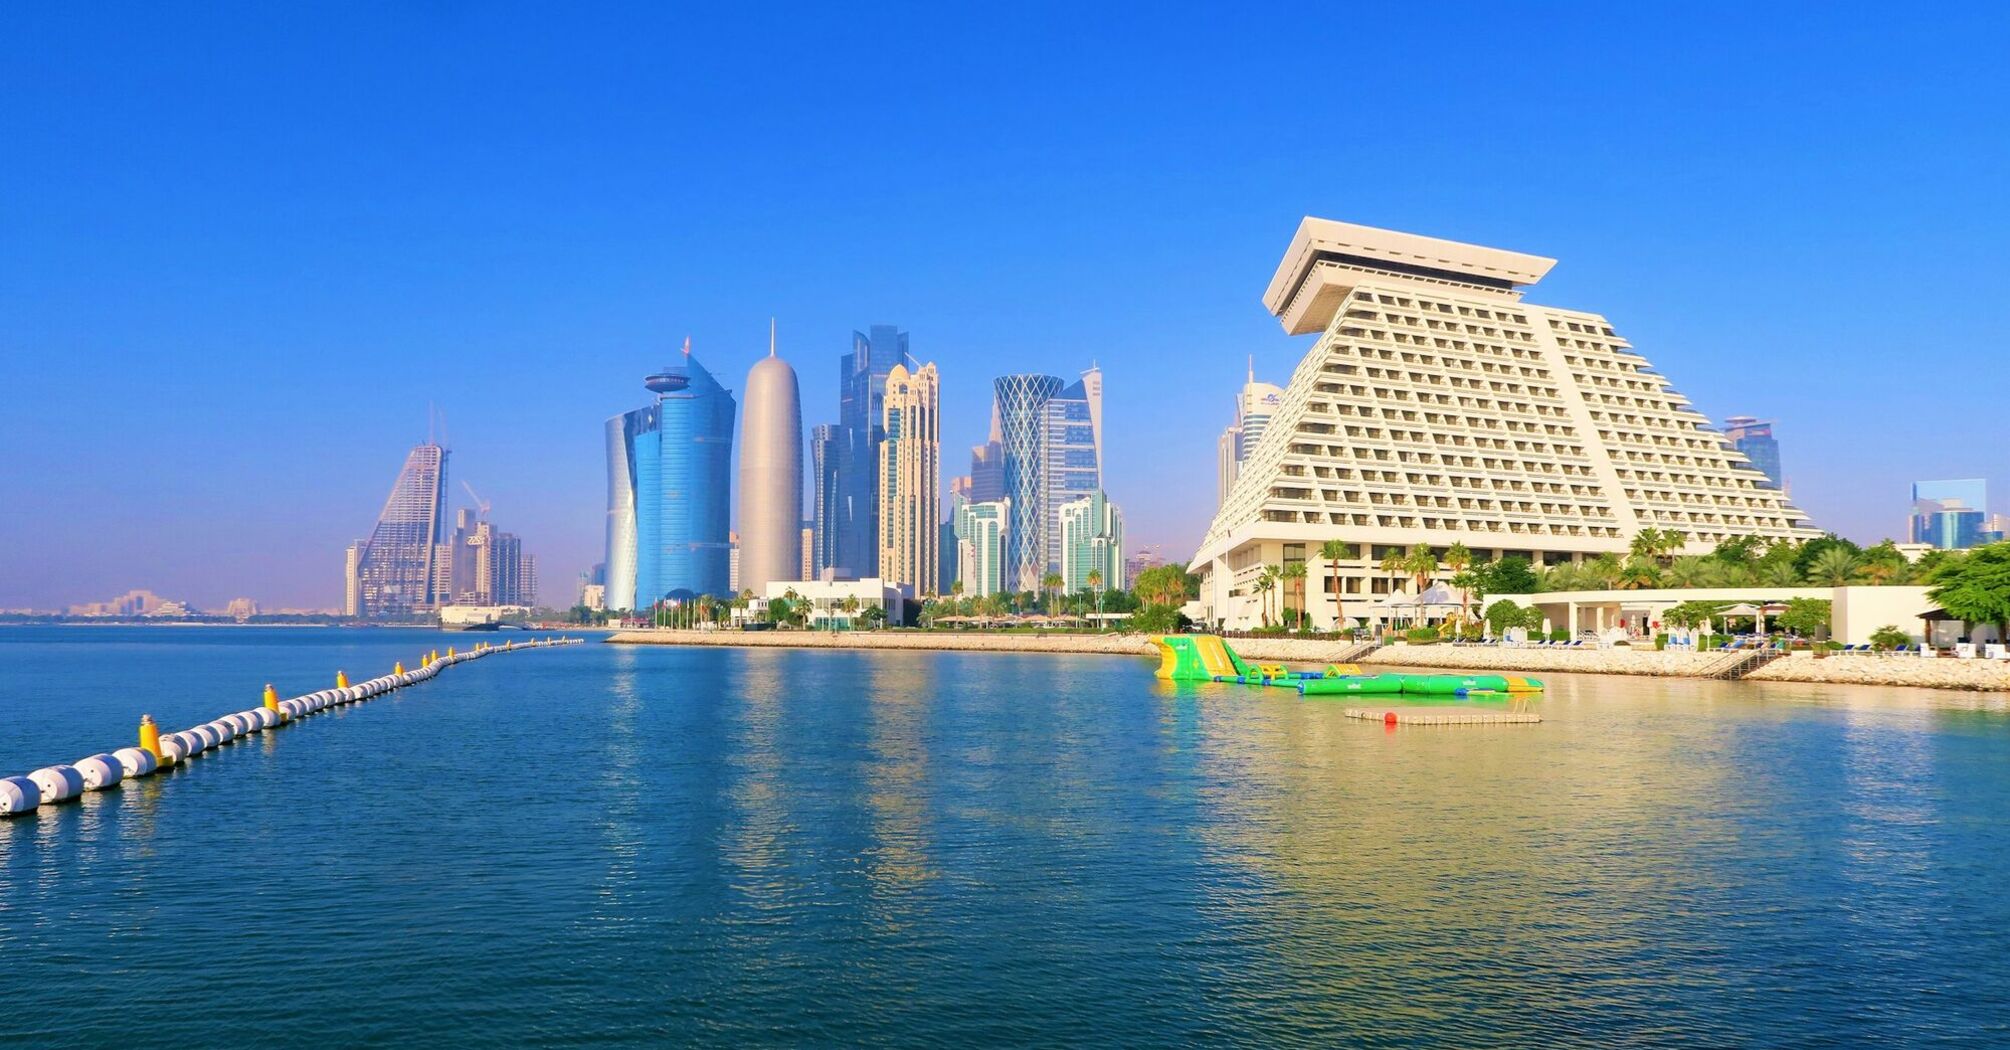 The skyline of Doha, Qatar, with modern skyscrapers along the coastline under a clear blue sky